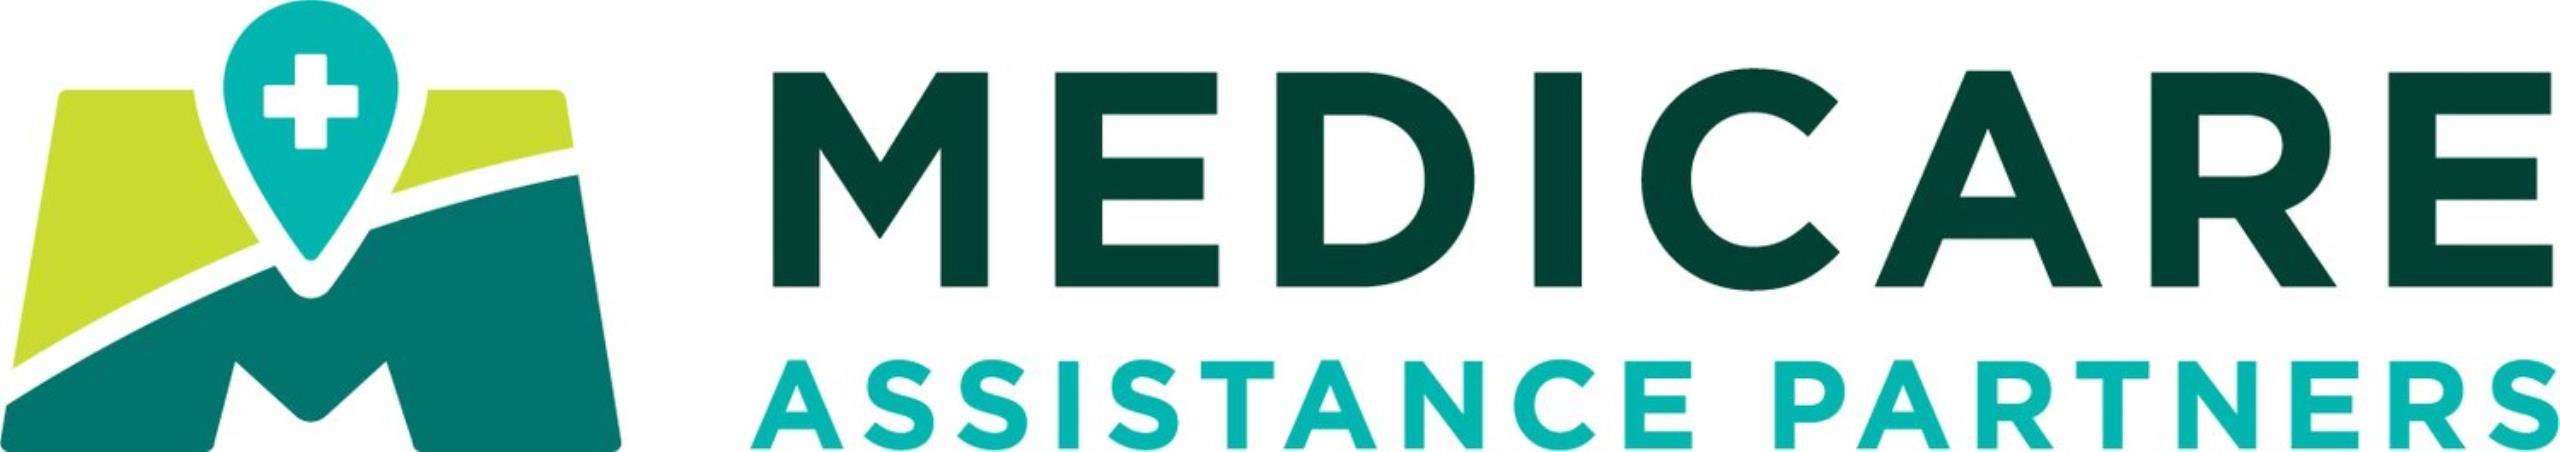 Medicare Assistance Partners Logo